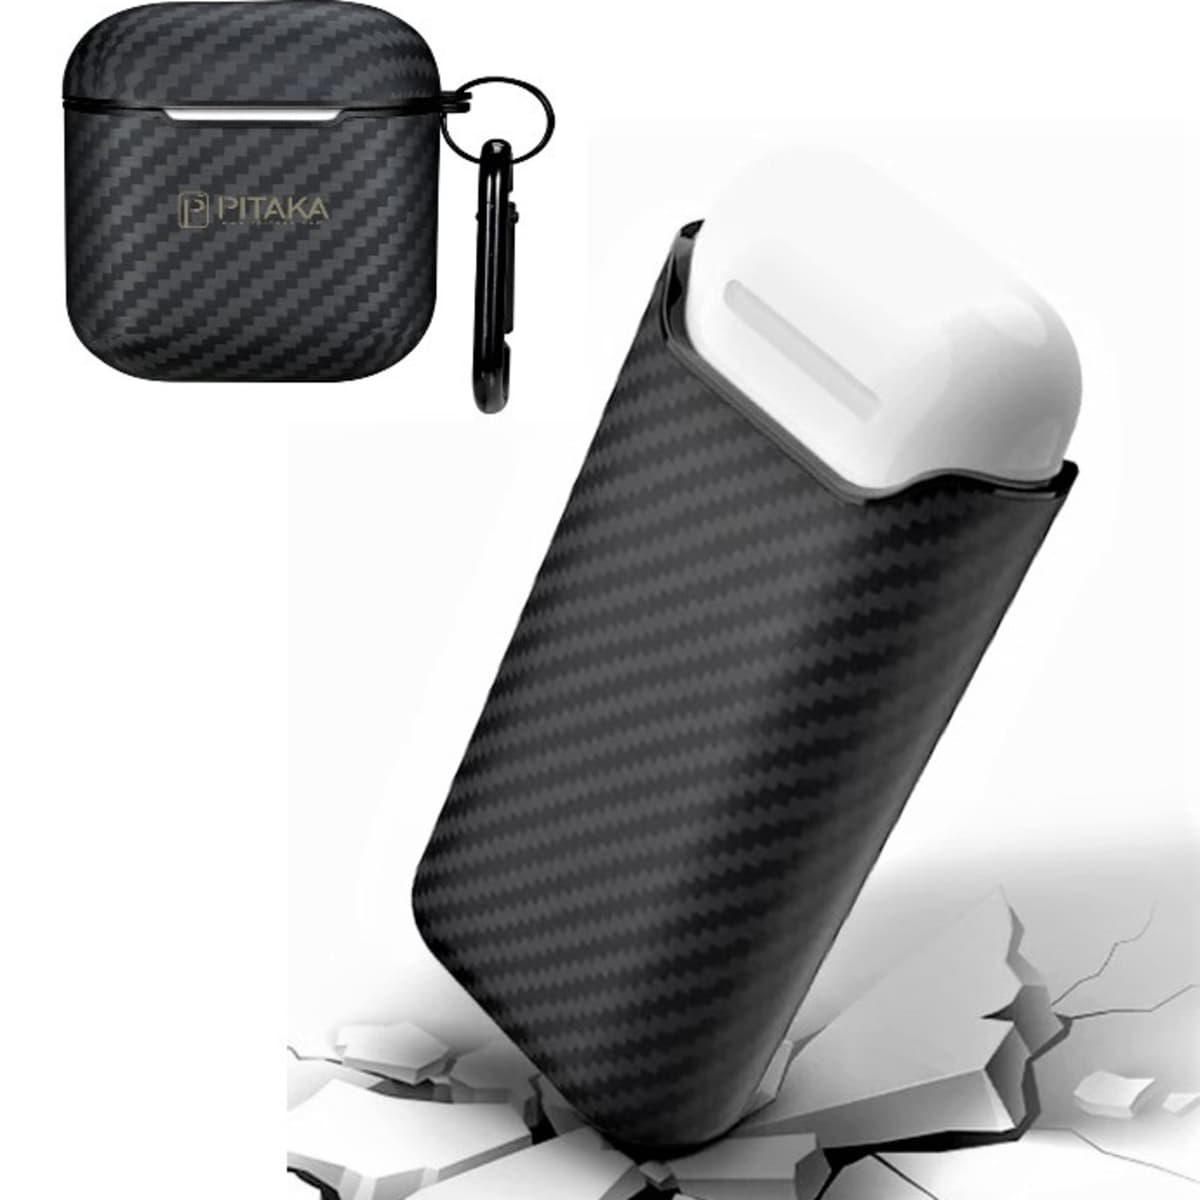 12 Best Designer Airpod Cases - Luxury AirPod Pro Cases